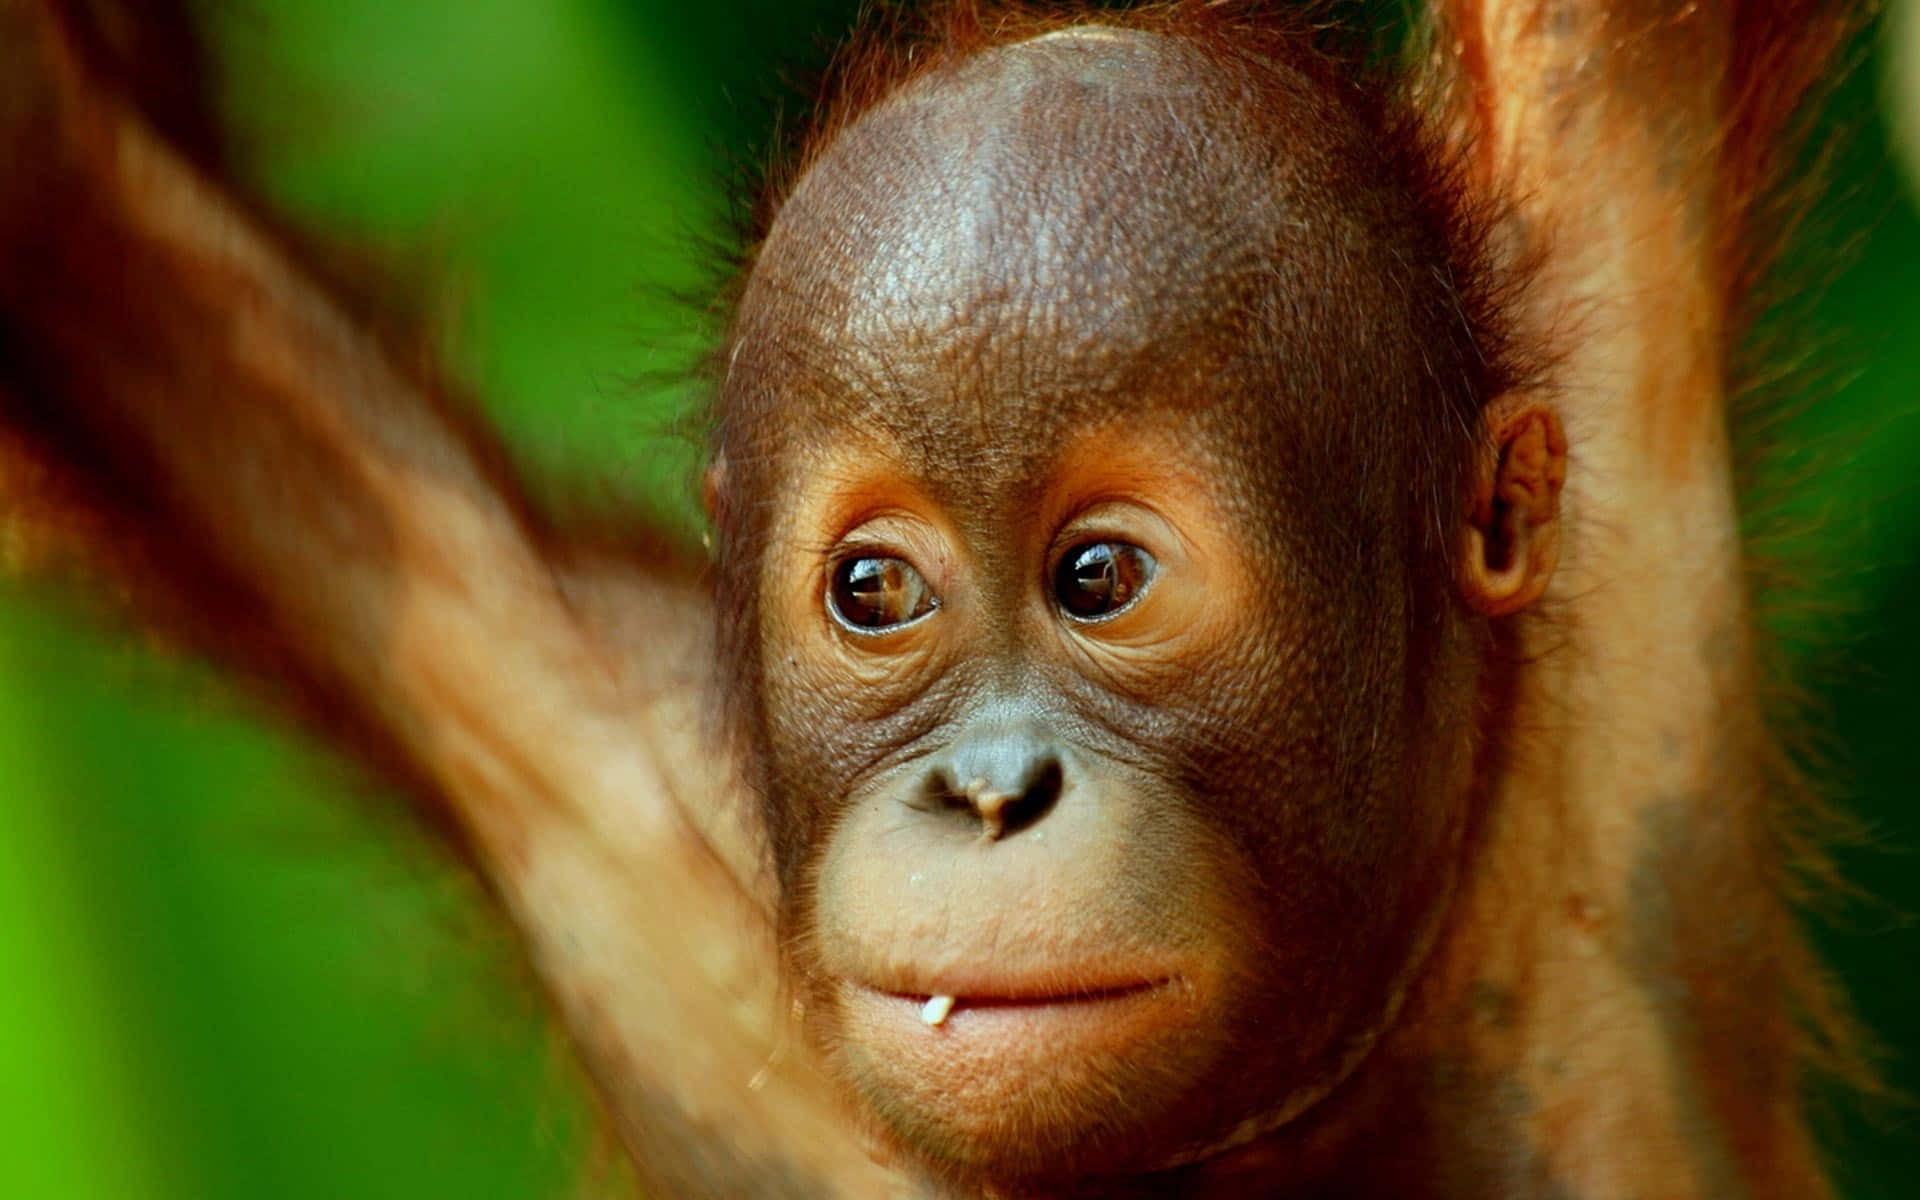 Orangutan Baby In The Jungle